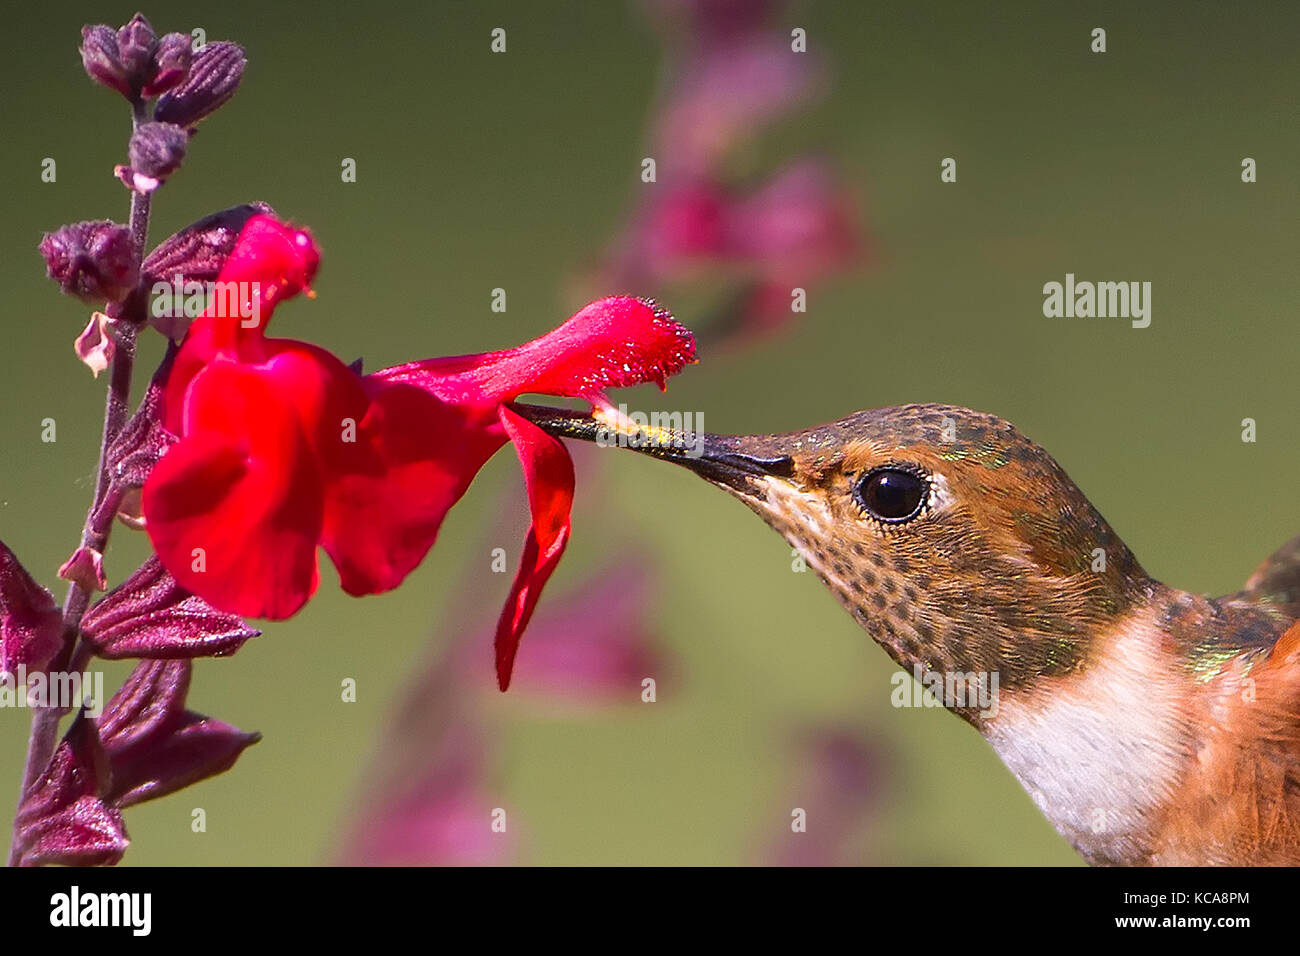 Allen's hummingbird feeding and pollinating flowers Stock Photo